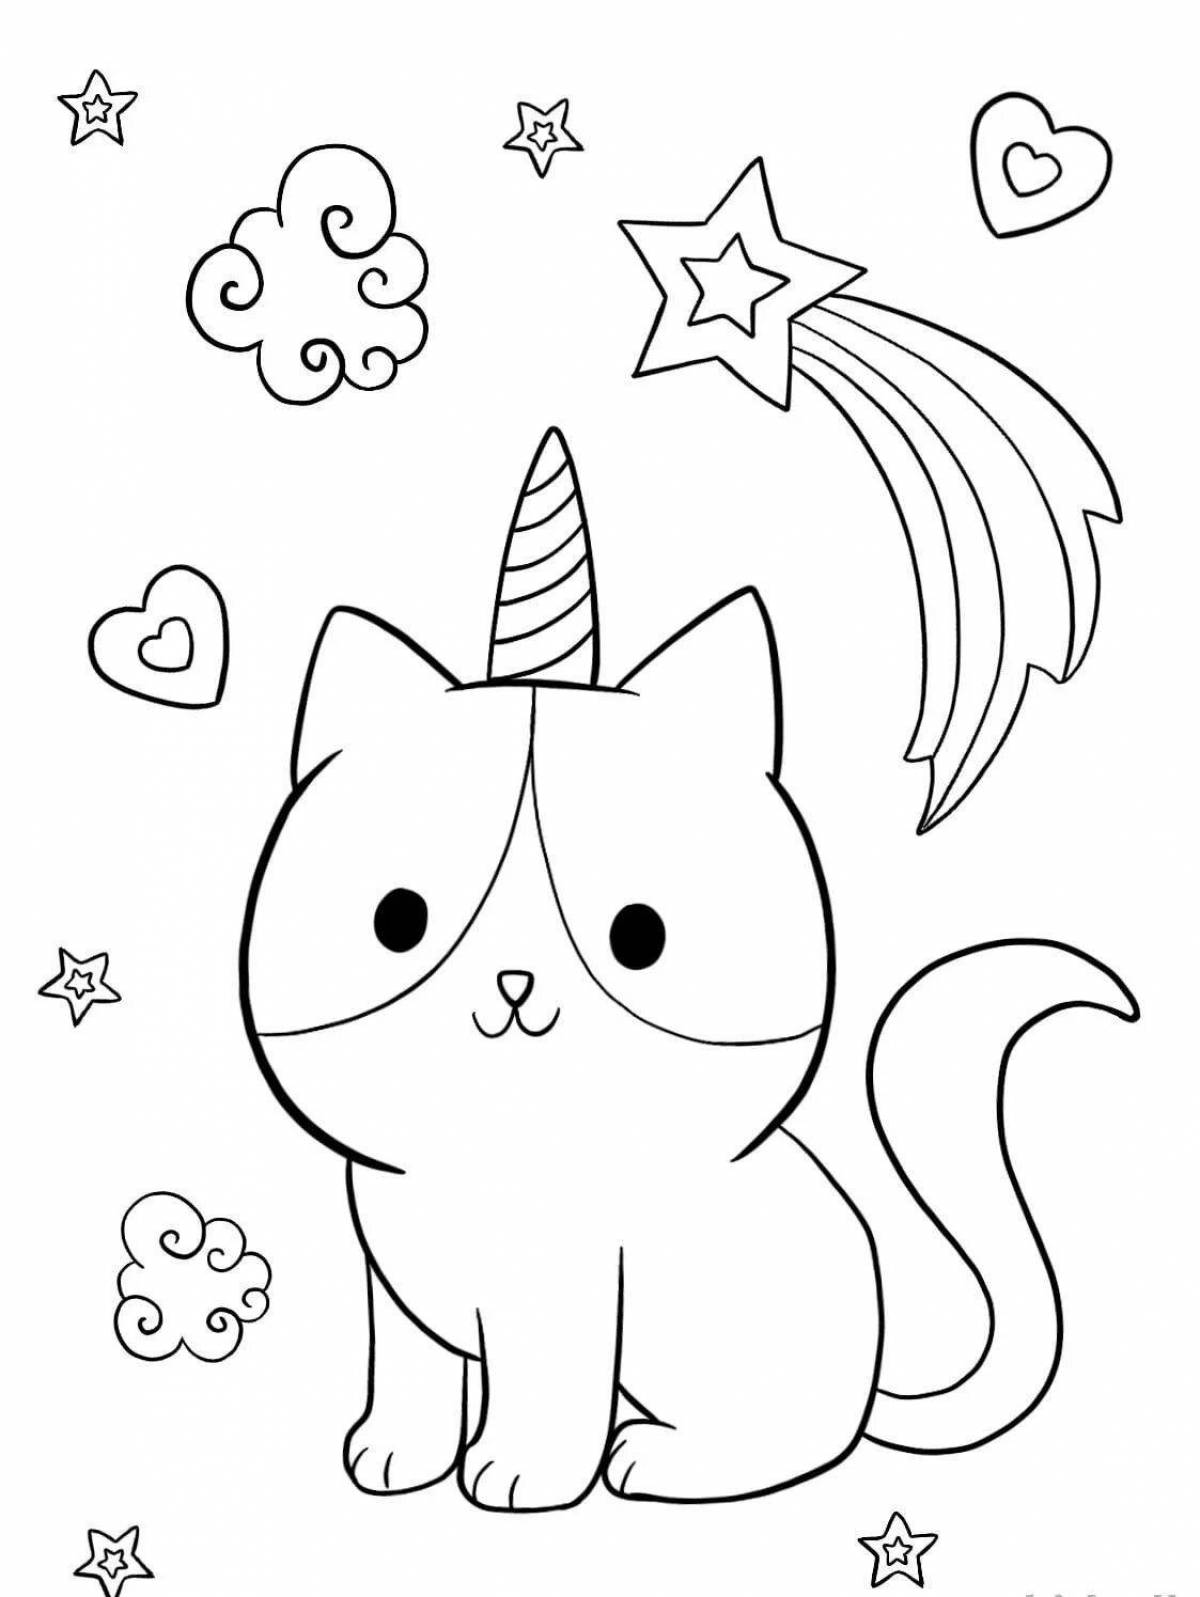 Excellent unicorn kitten coloring book